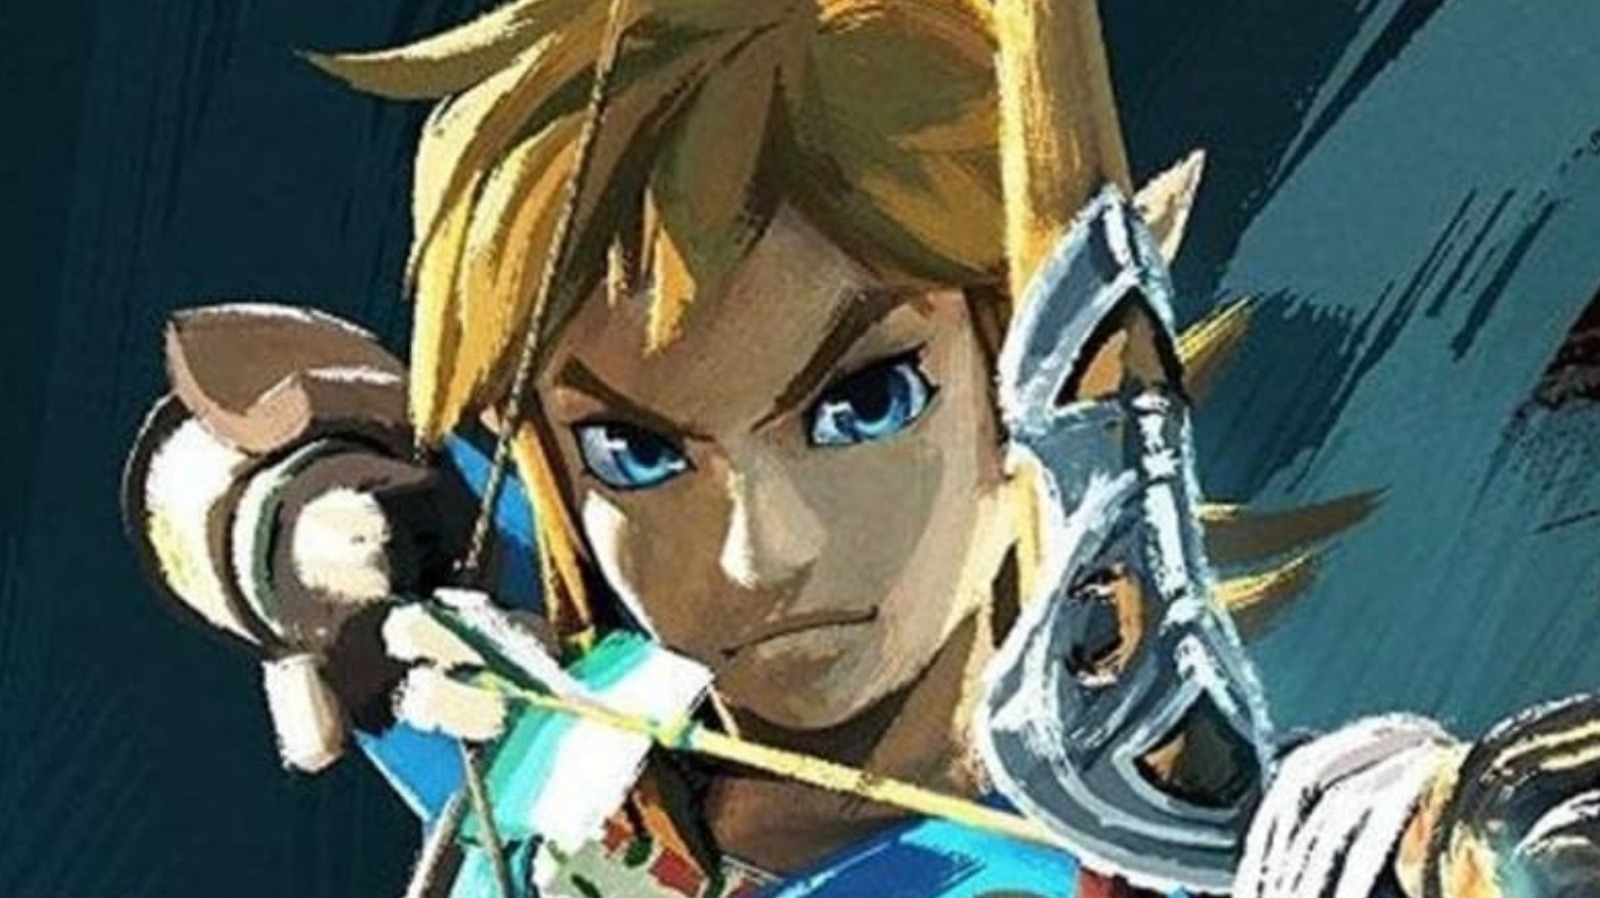 Nintendo Confirms 'Legend Of Zelda' Live-Action Movie Adaptation